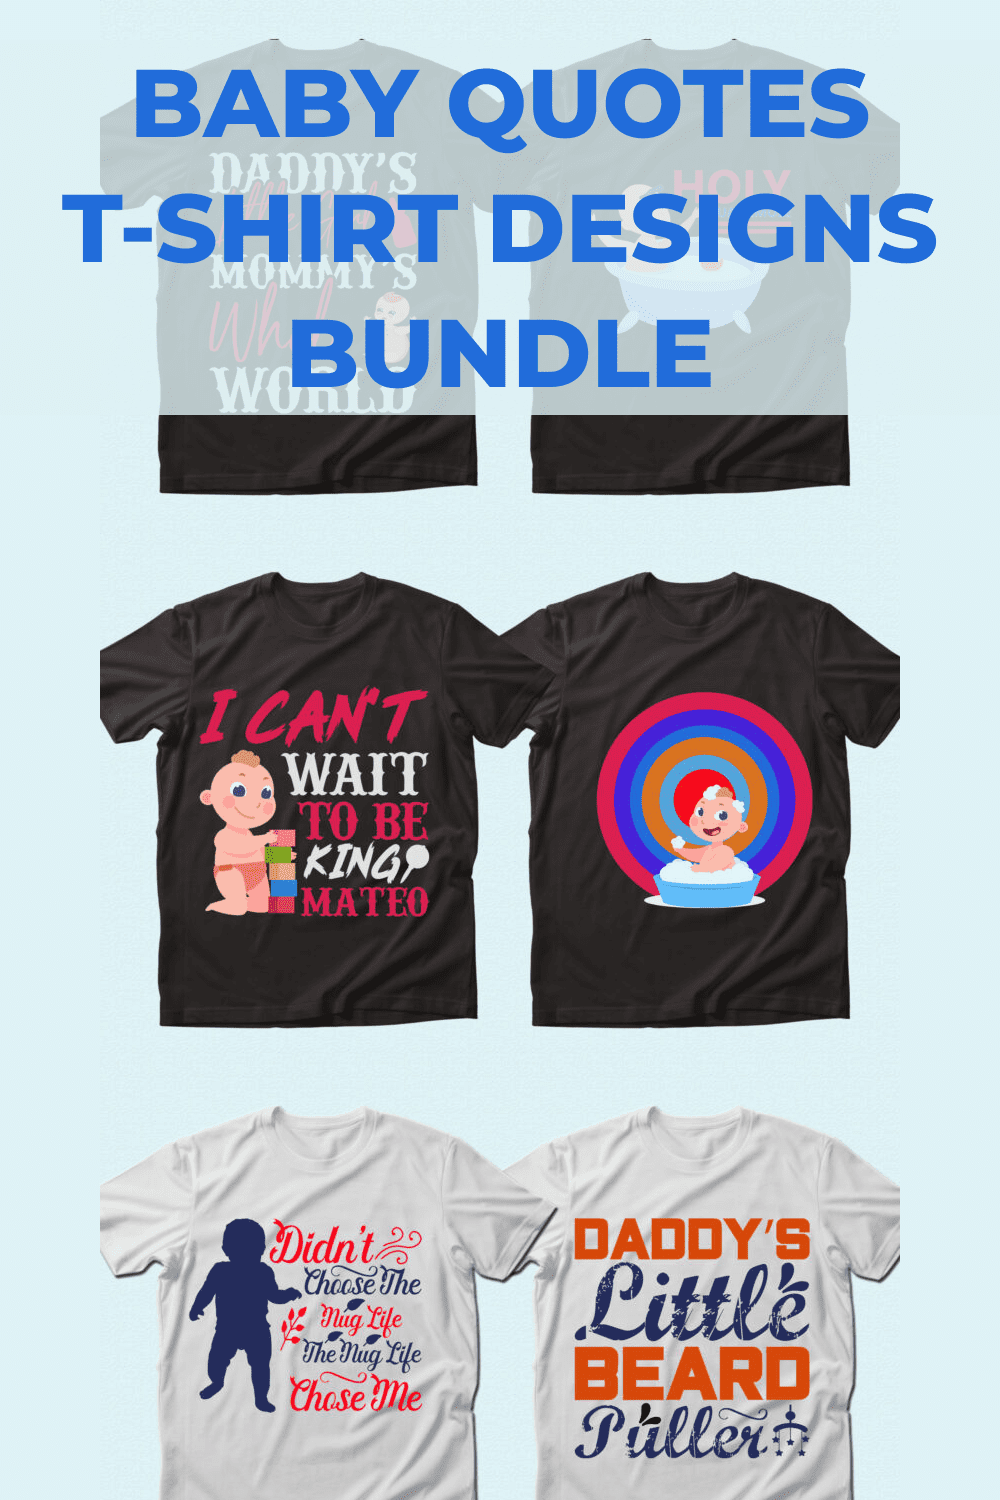 Trendy 20 Baby Quotes T-shirt Designs Bundle by MasterBundles Pinterest Collage Image.